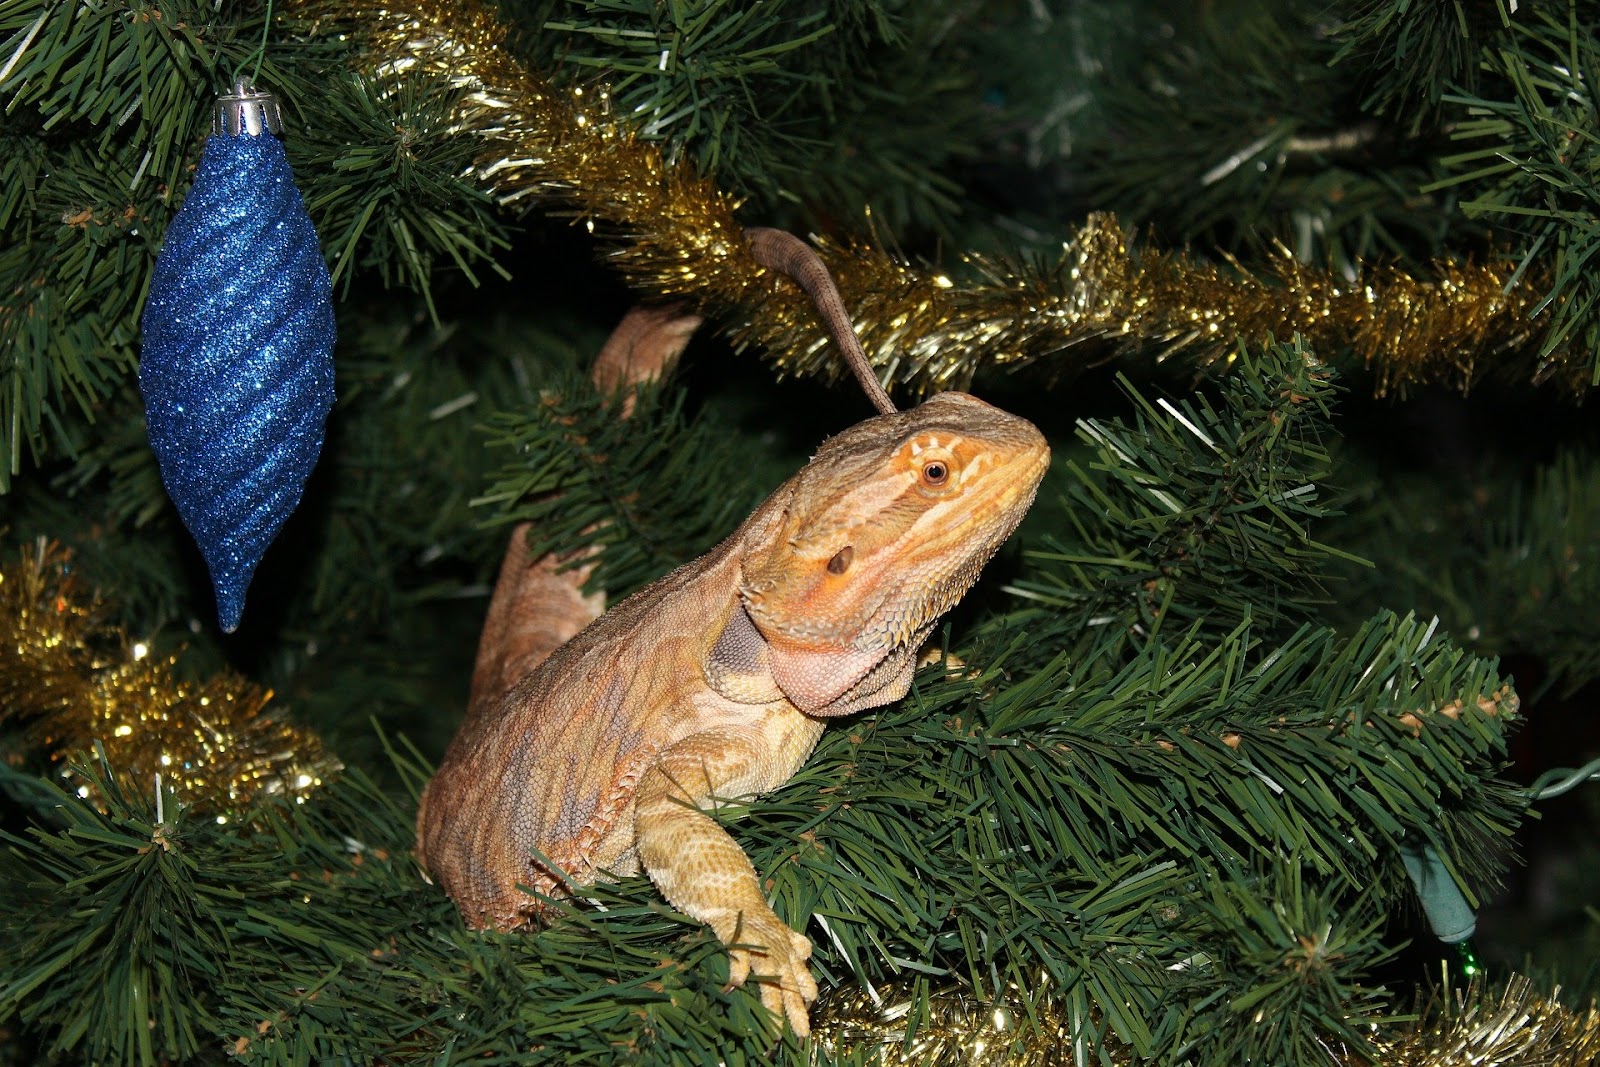 Bearded dragon lizard in Christmas tree